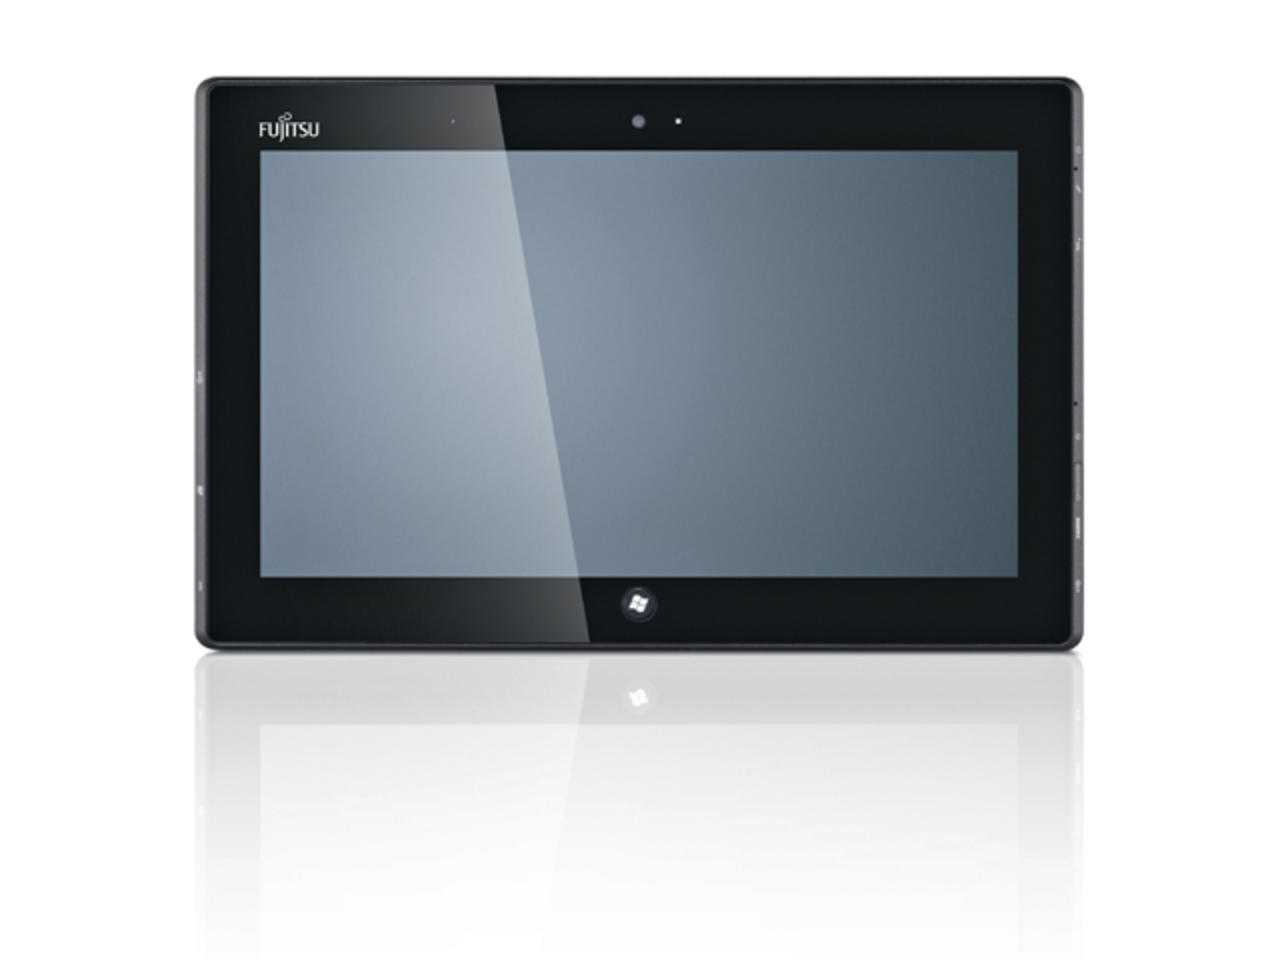 Fujitsu stylistic q702 intel core i5 256gb (белый) - купить , скидки, цена, отзывы, обзор, характеристики - планшеты